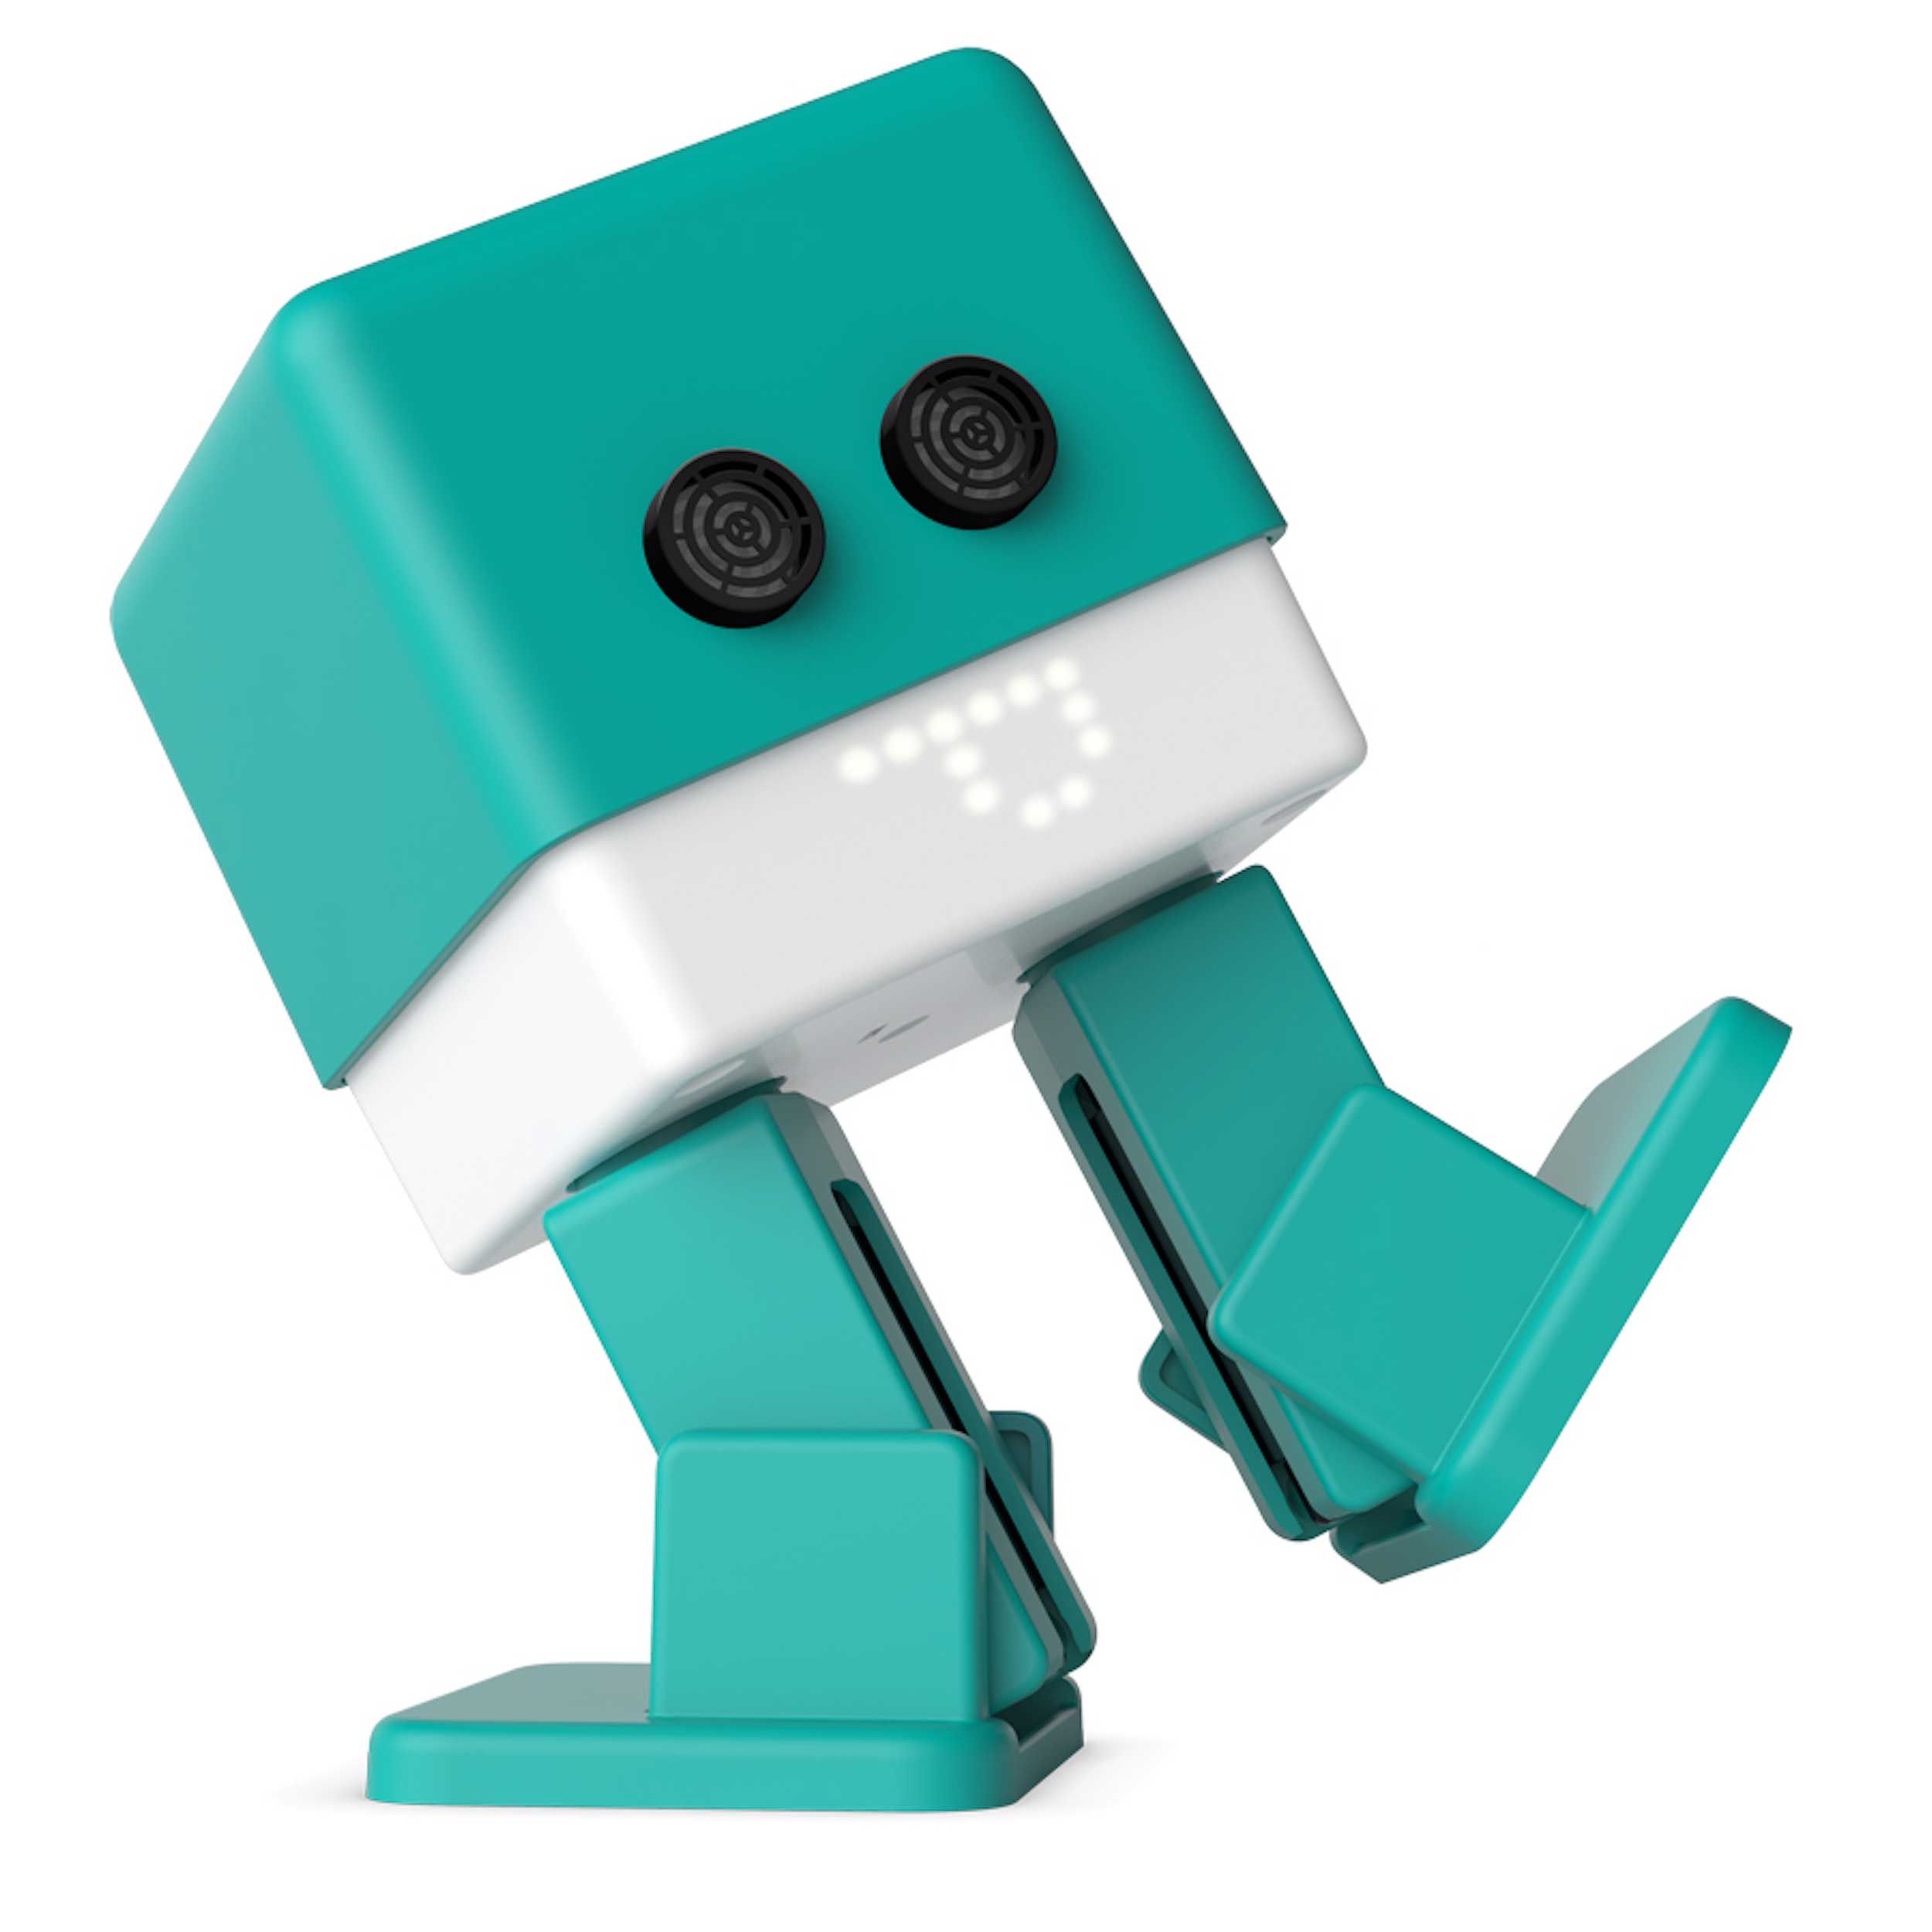 Isaac Restricciones O cualquiera Can a robot help teach kids IT skills? - Good Housekeeping